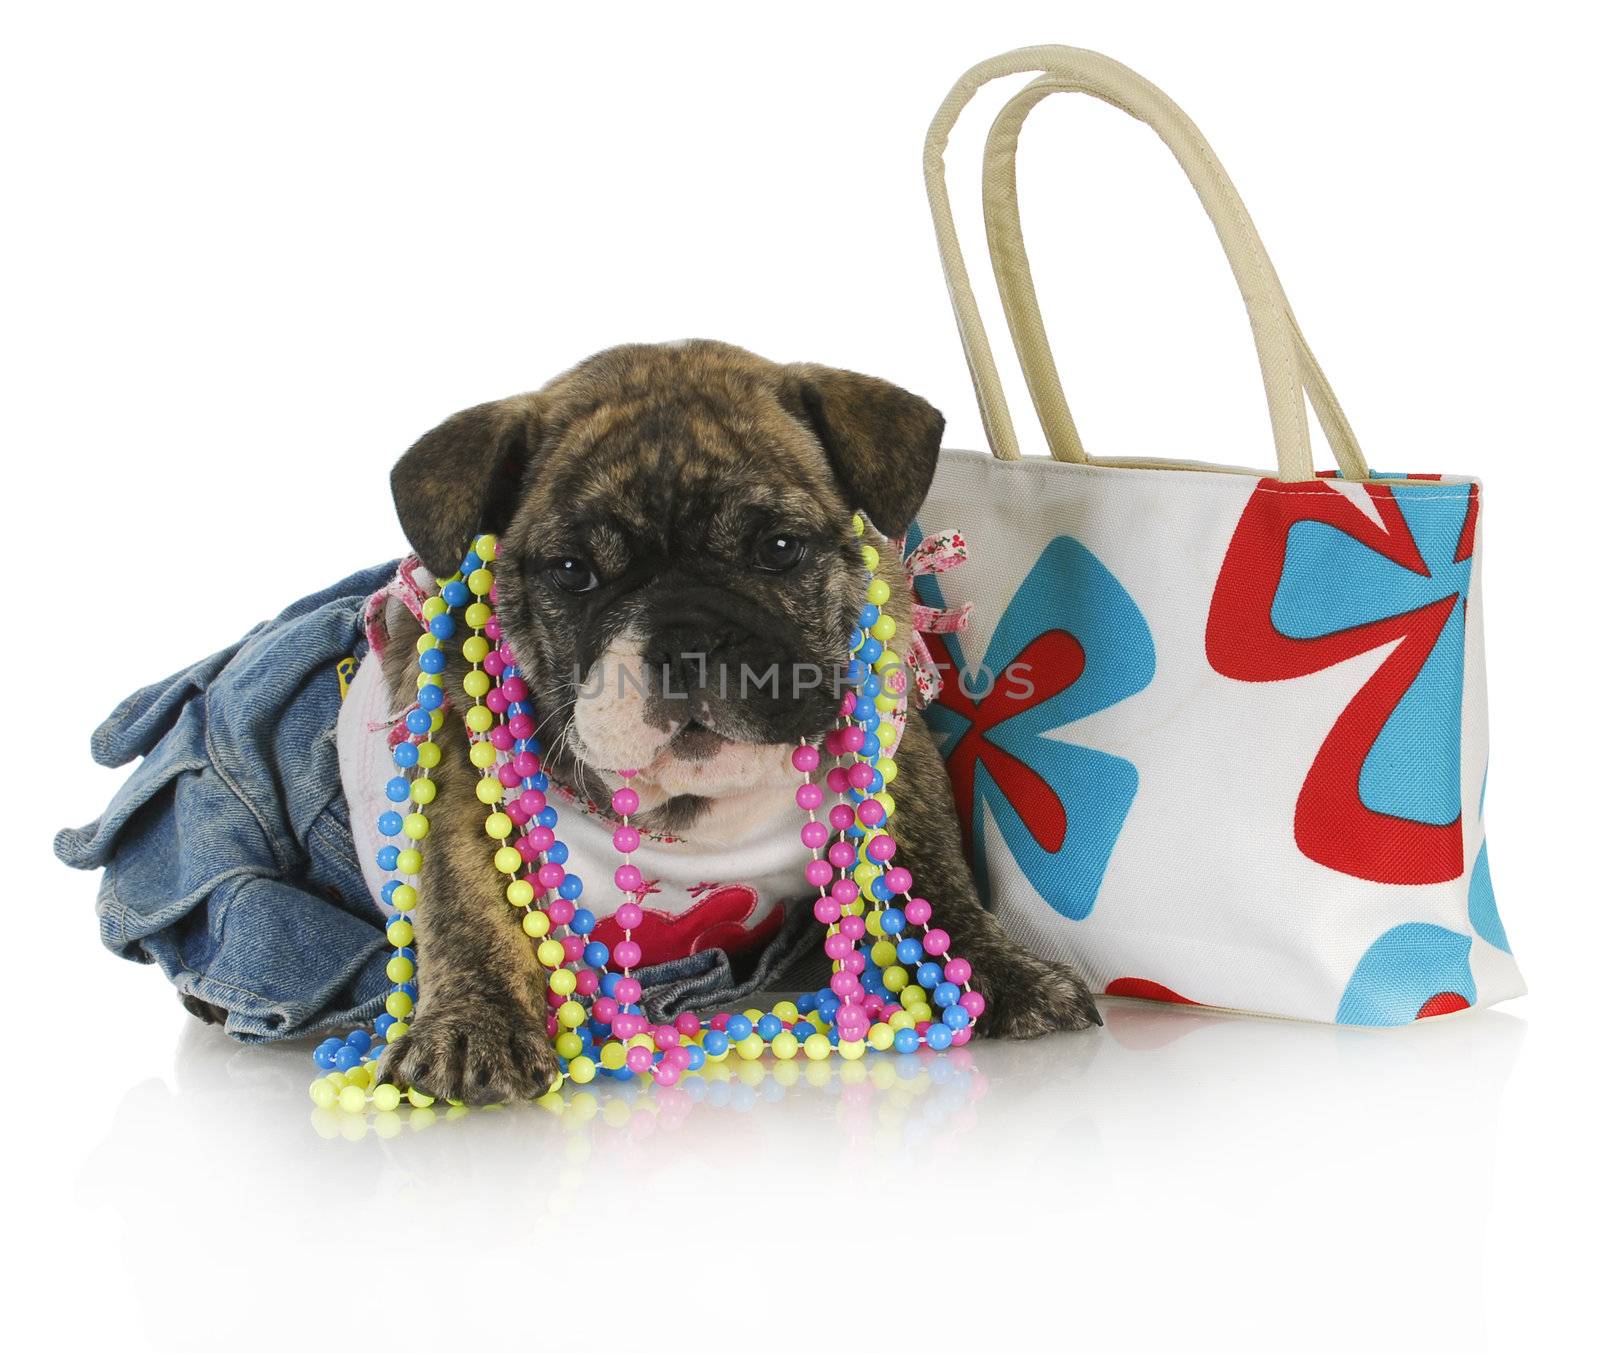 female puppy - english bulldog female puppy dressed up with purse isolated on white background